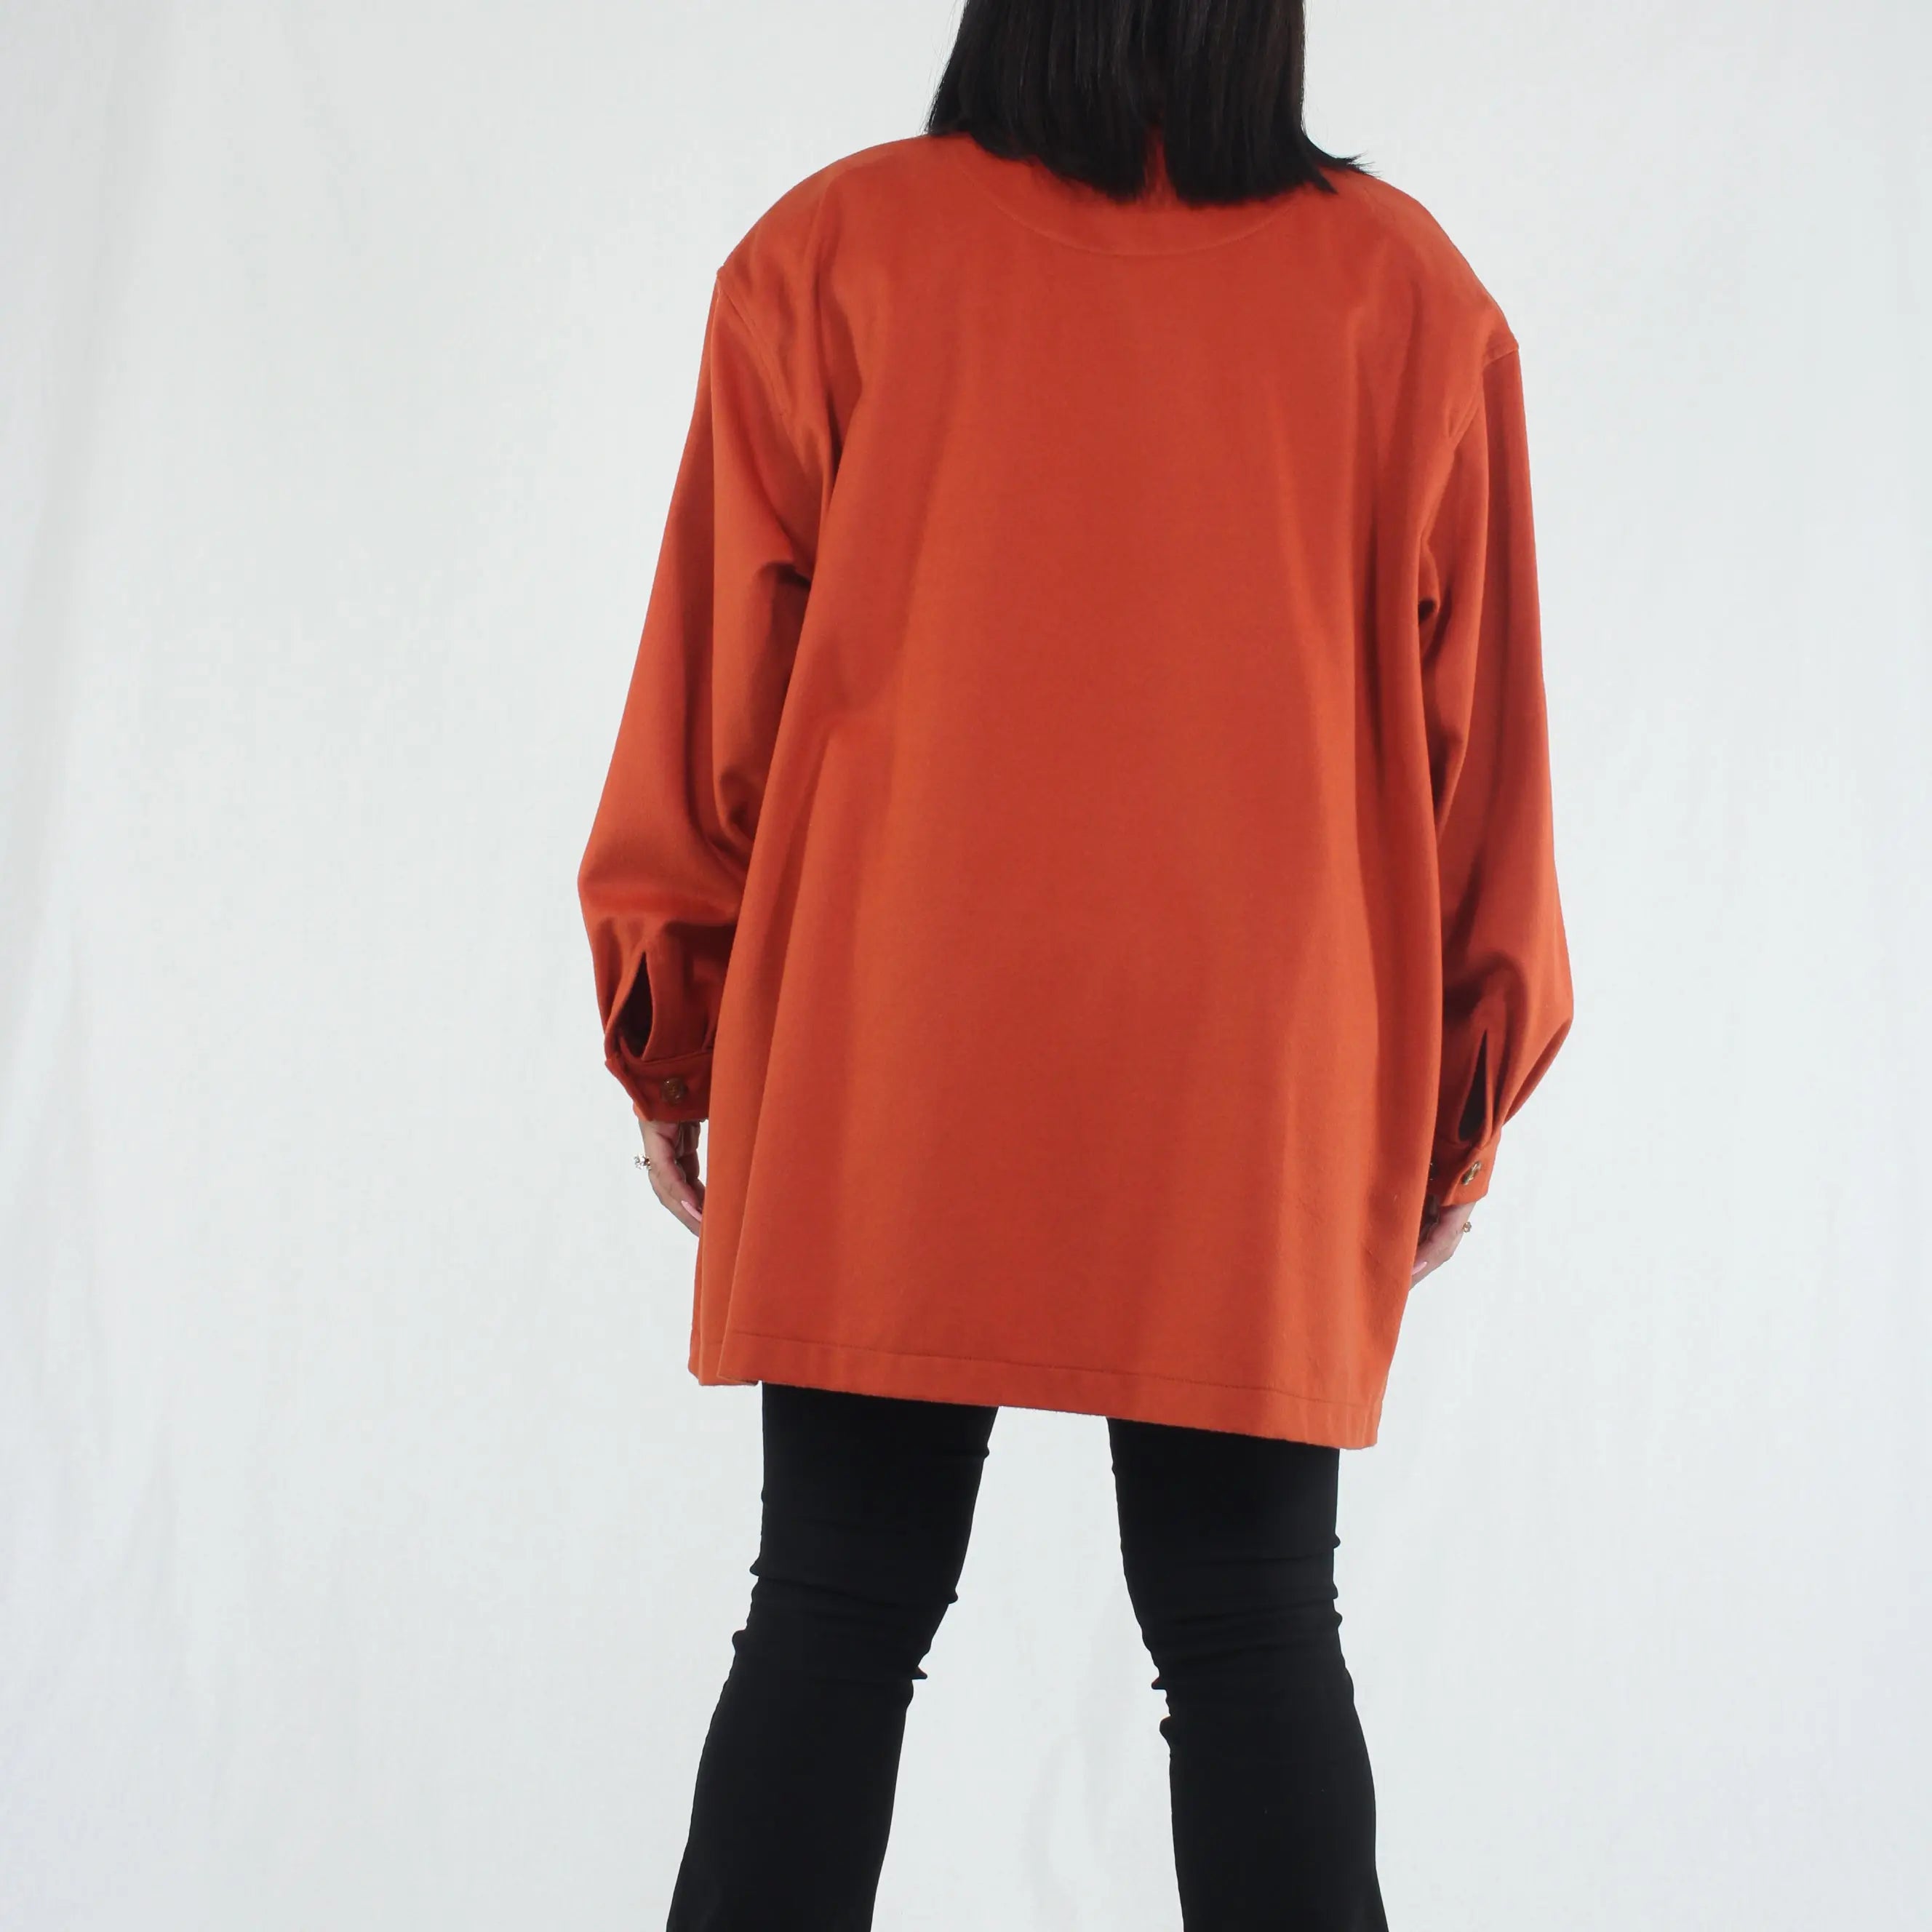 Verse - Orange Wool Blend Coat with Shoulder Pads- ThriftTale.com - Vintage and second handclothing